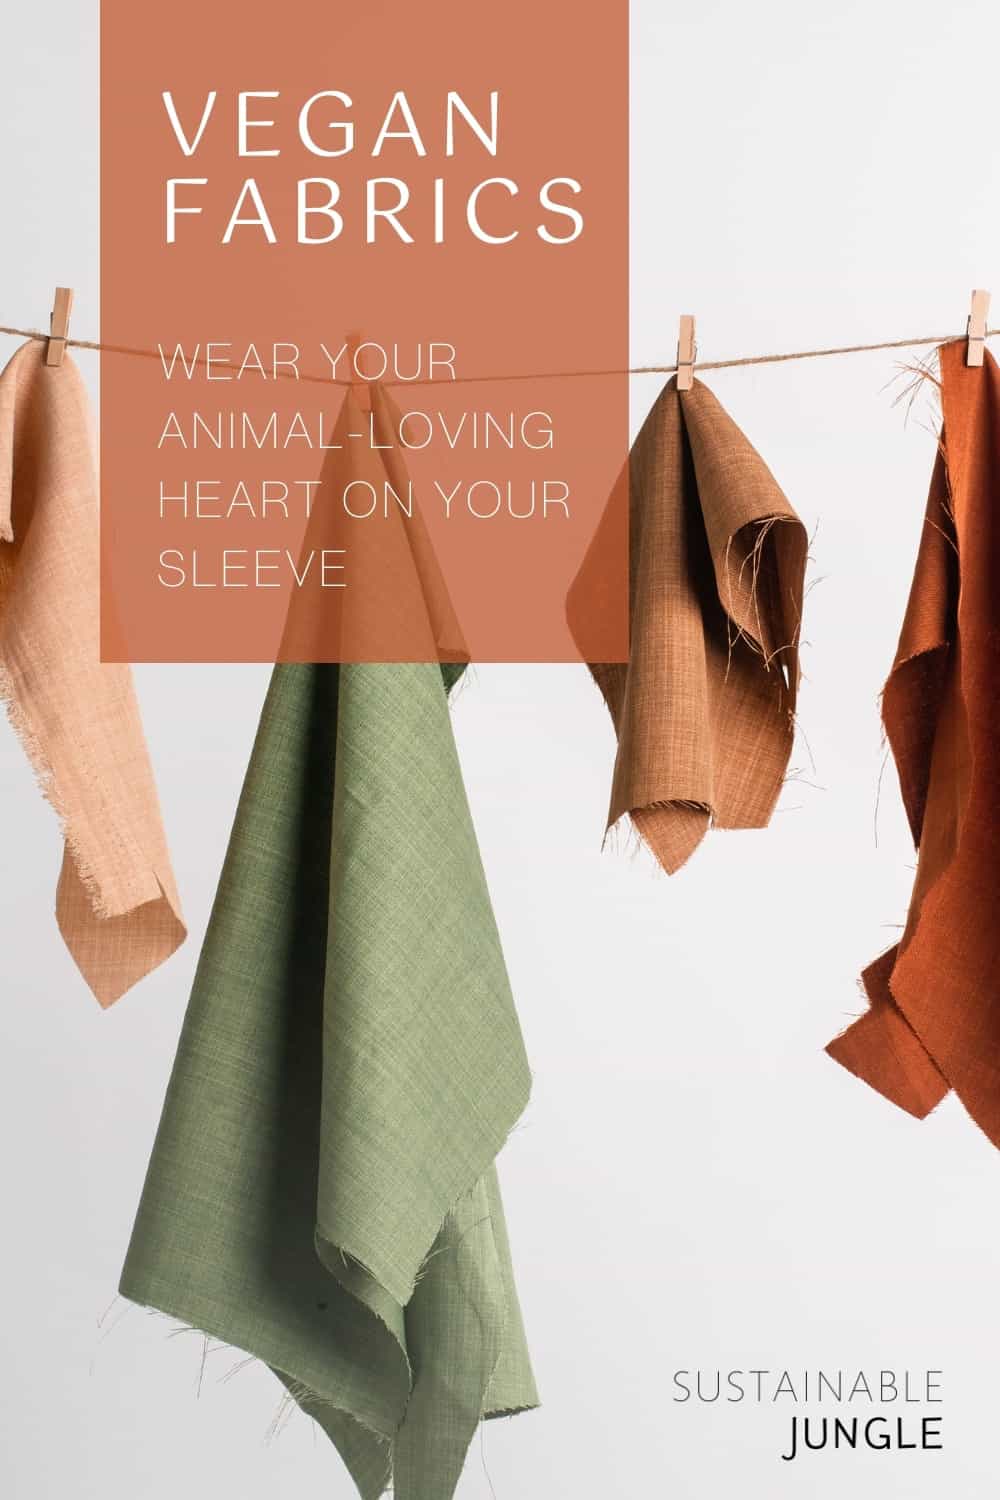 13 Vegan Fabrics: Wear Your Animal-Loving Heart On Your Sleeve #veganfabrics #veganfriendlyfabrics #sustainableveganfabrics #sustainablejungle Image by Biana Marie Arreola via Corelens on Canva-Pro